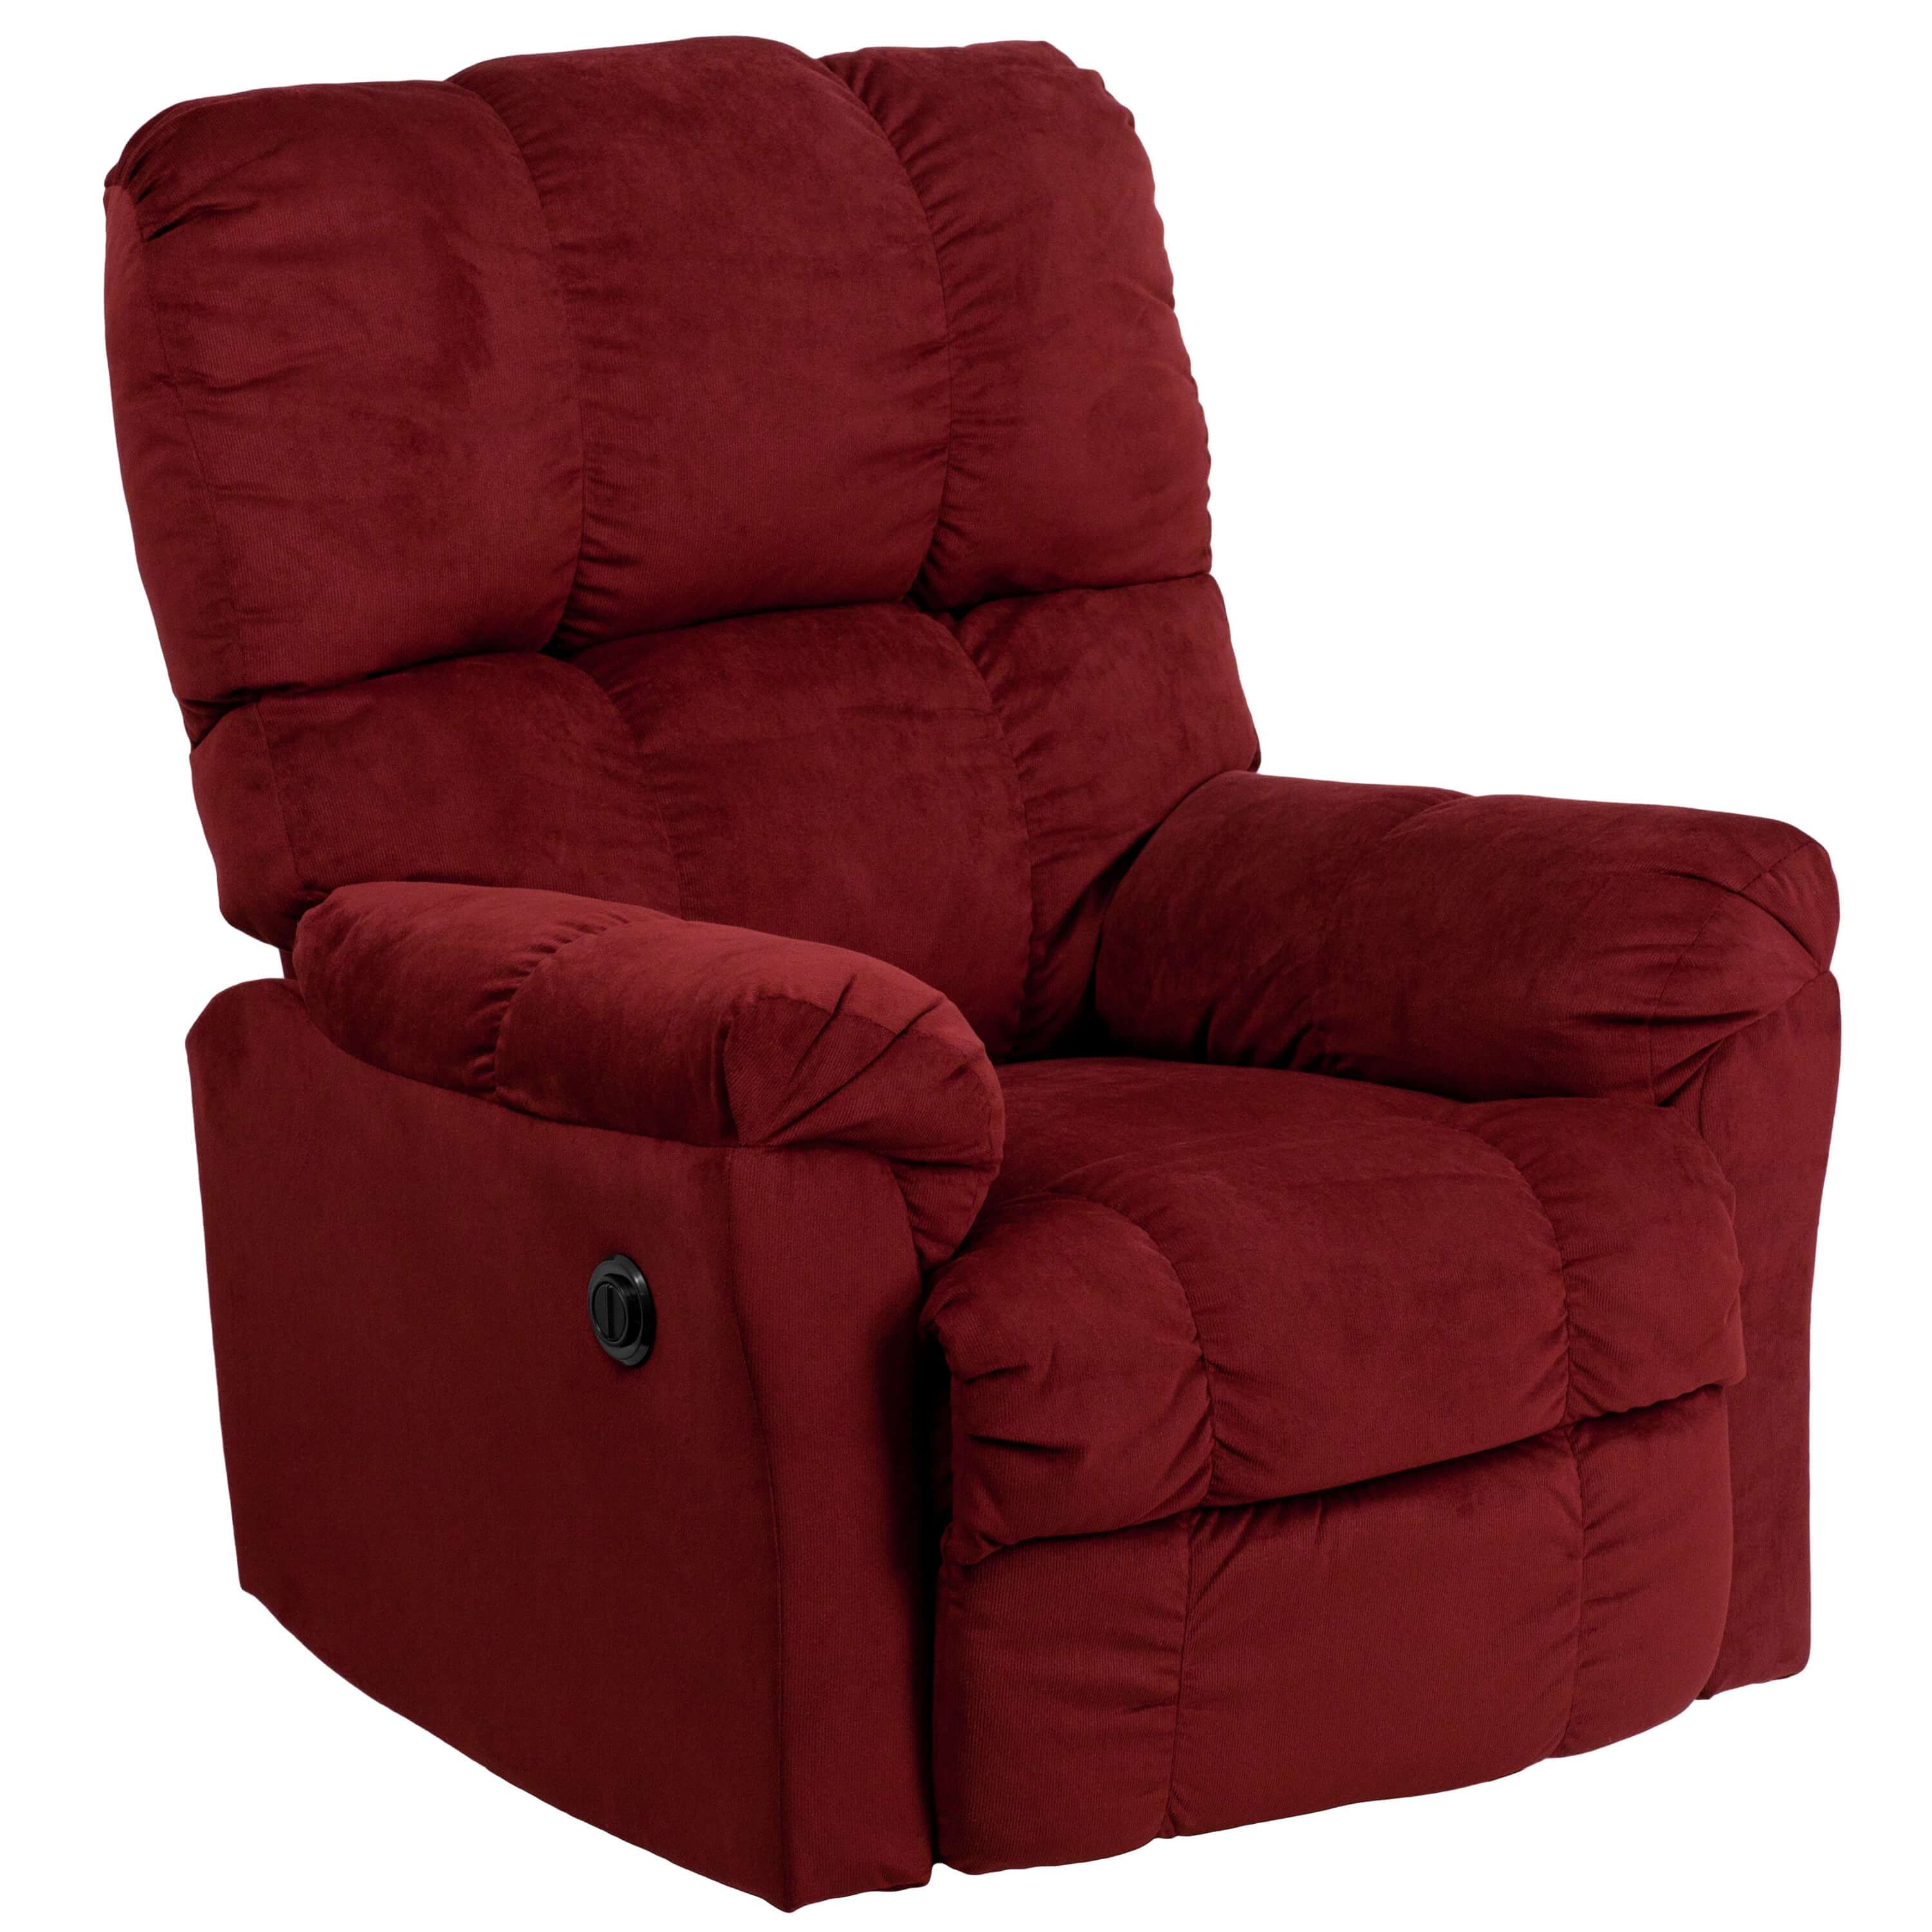 Modern recliner chair CUB AM P9320 4170 GG FLA 1